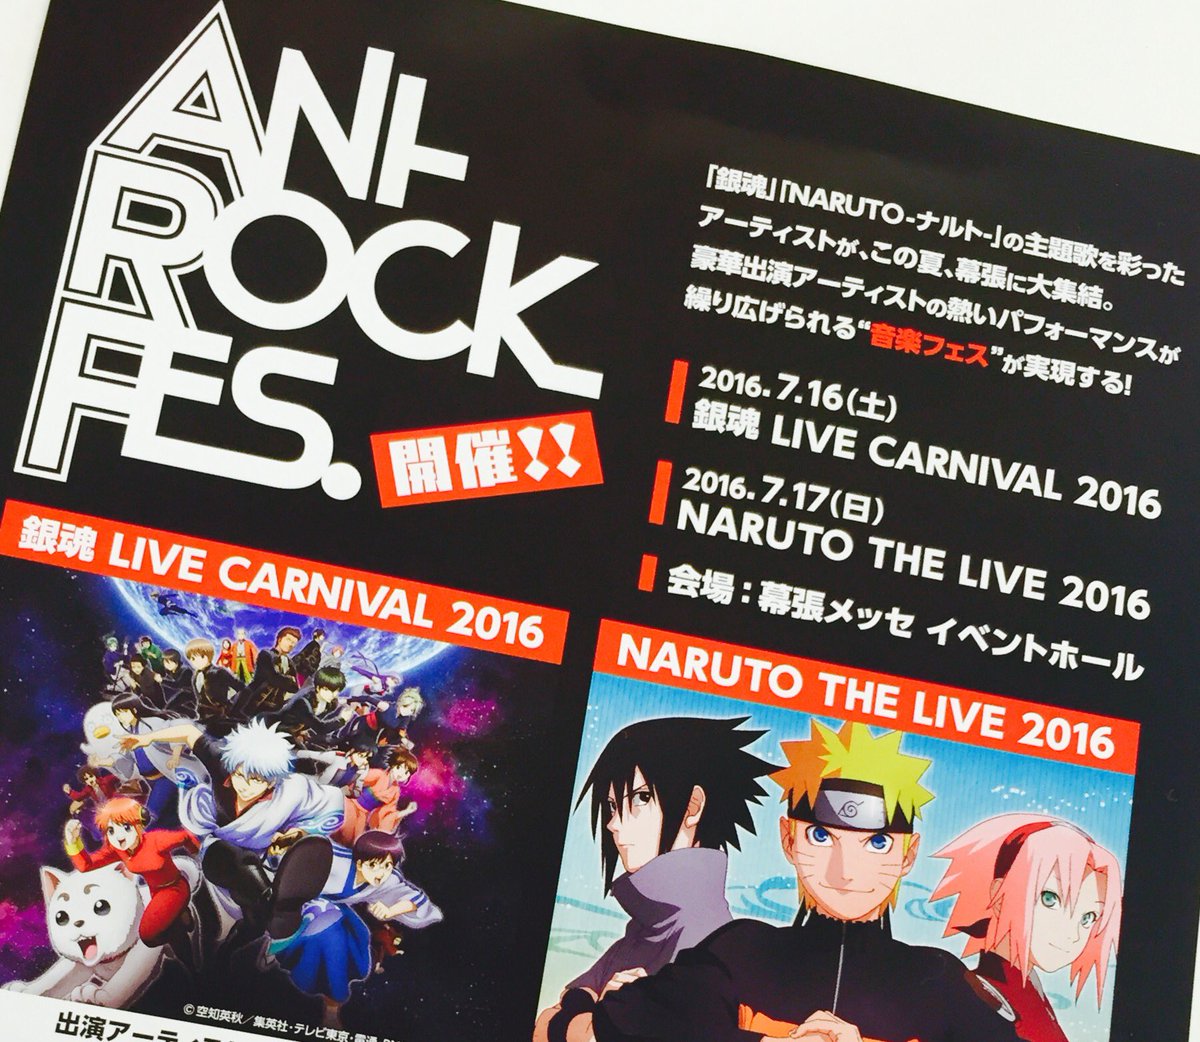 Ani Rock Fes 公式 Ar Twitter 16年7月16日 土 7月17日 日 開催 会場は 幕張メッセ イベントホール 銀魂 ナルト Naruto T Co O0k3vfcg7b